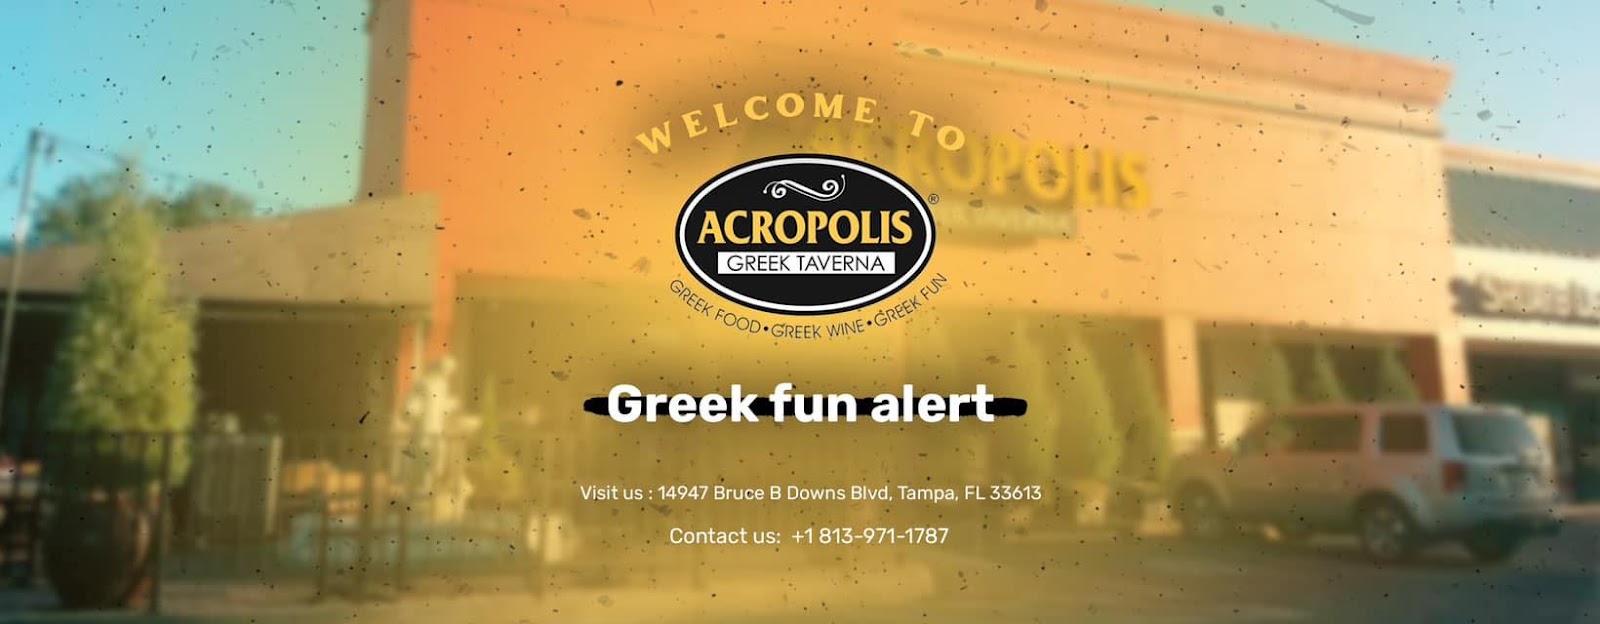 Acropolis Greek Taverna - New Tampa Best Happy Hour